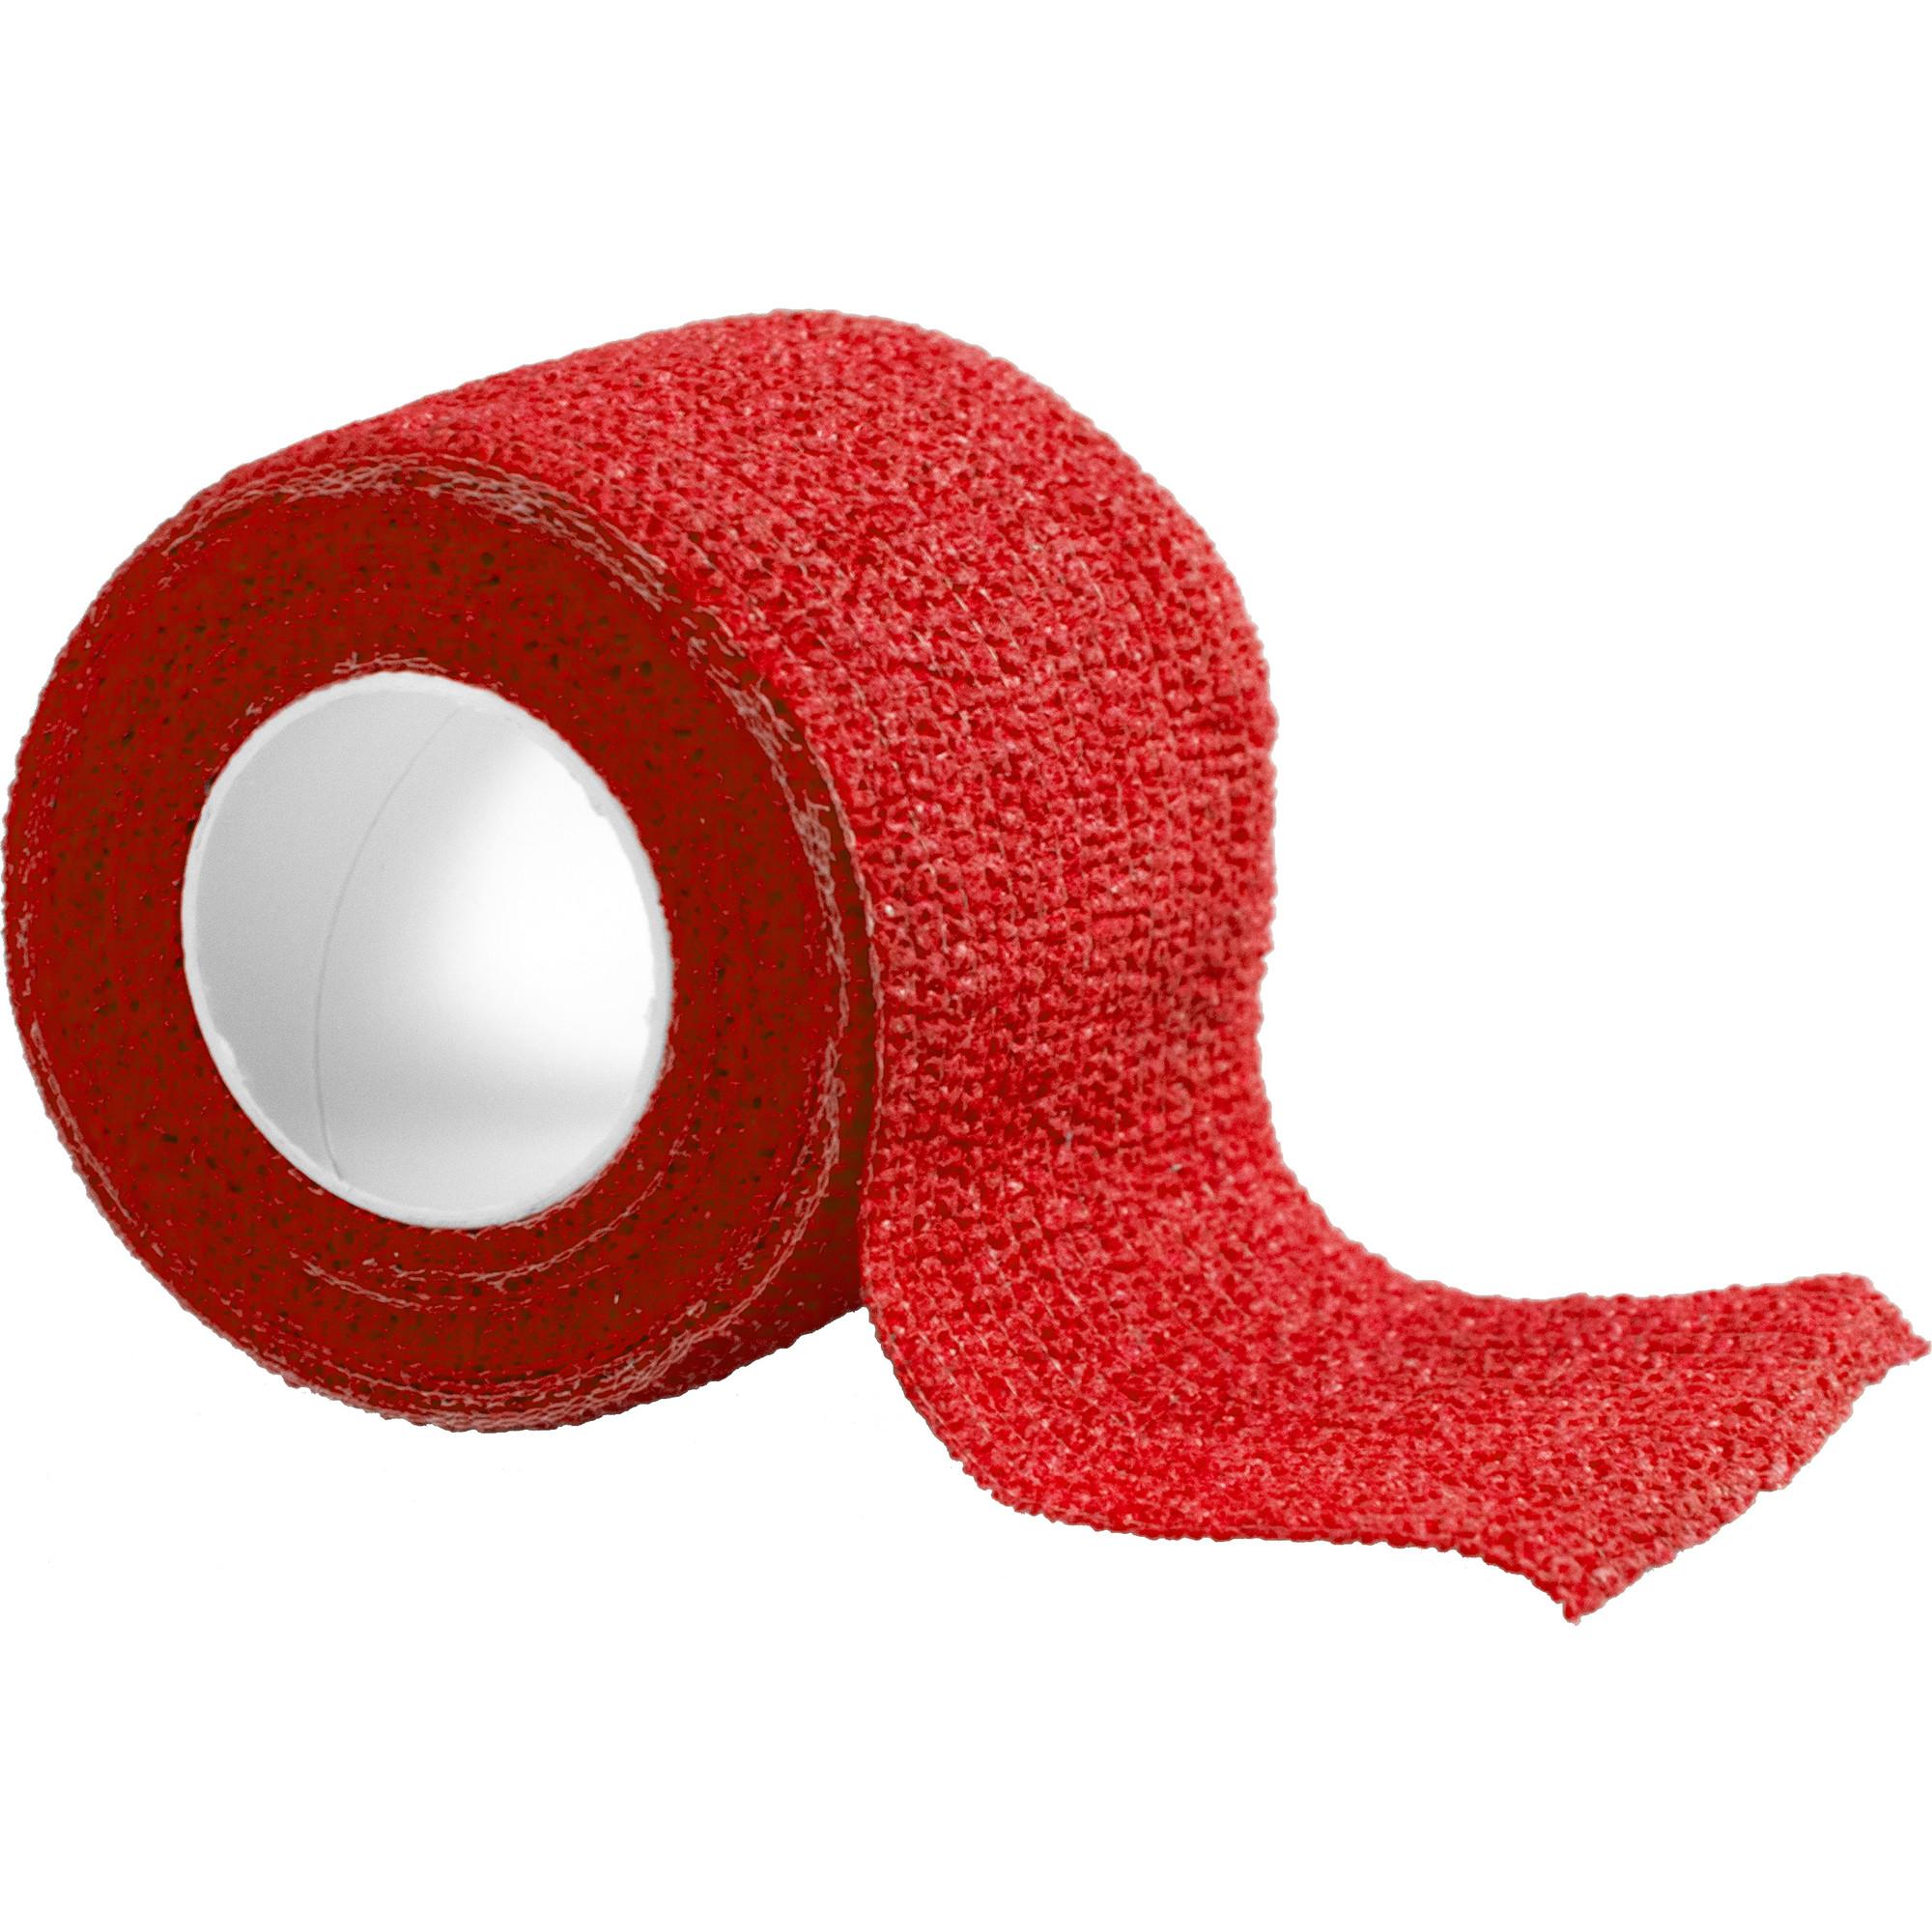 Kleverig Bedachtzaam bezoek Sportamundo Sokken Tape Red - 5cm x 4,5m - Sportamundo.com